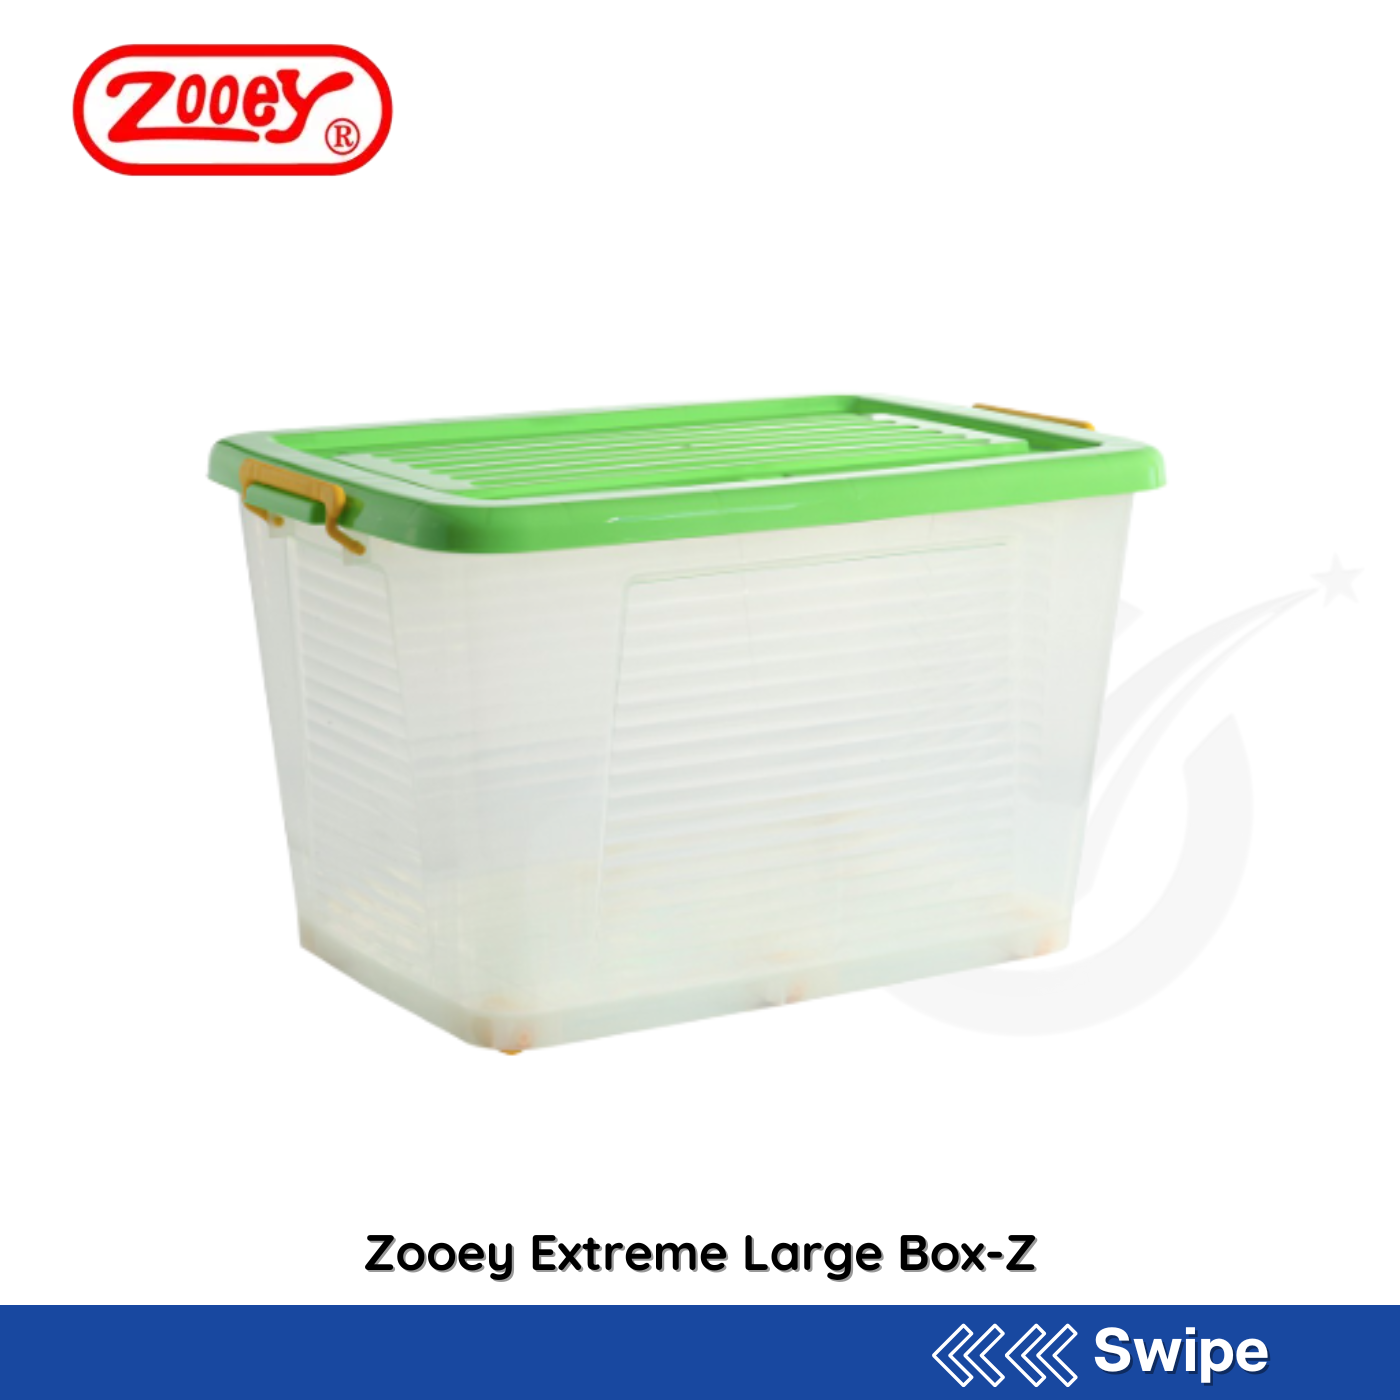 Zooey Extreme Large Box-Z - People's Choice Marketing